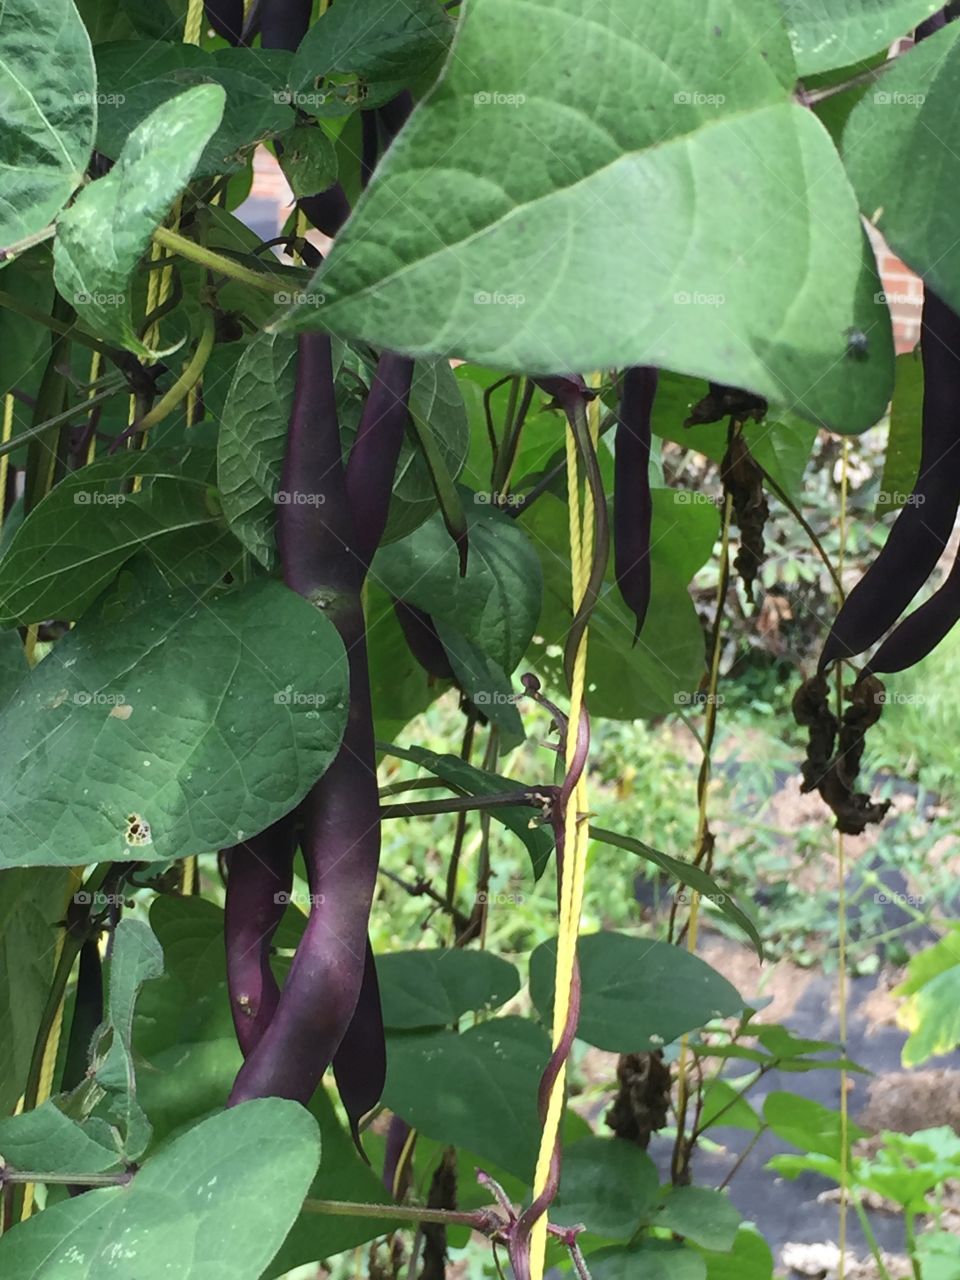 Crazy purple garden green beans